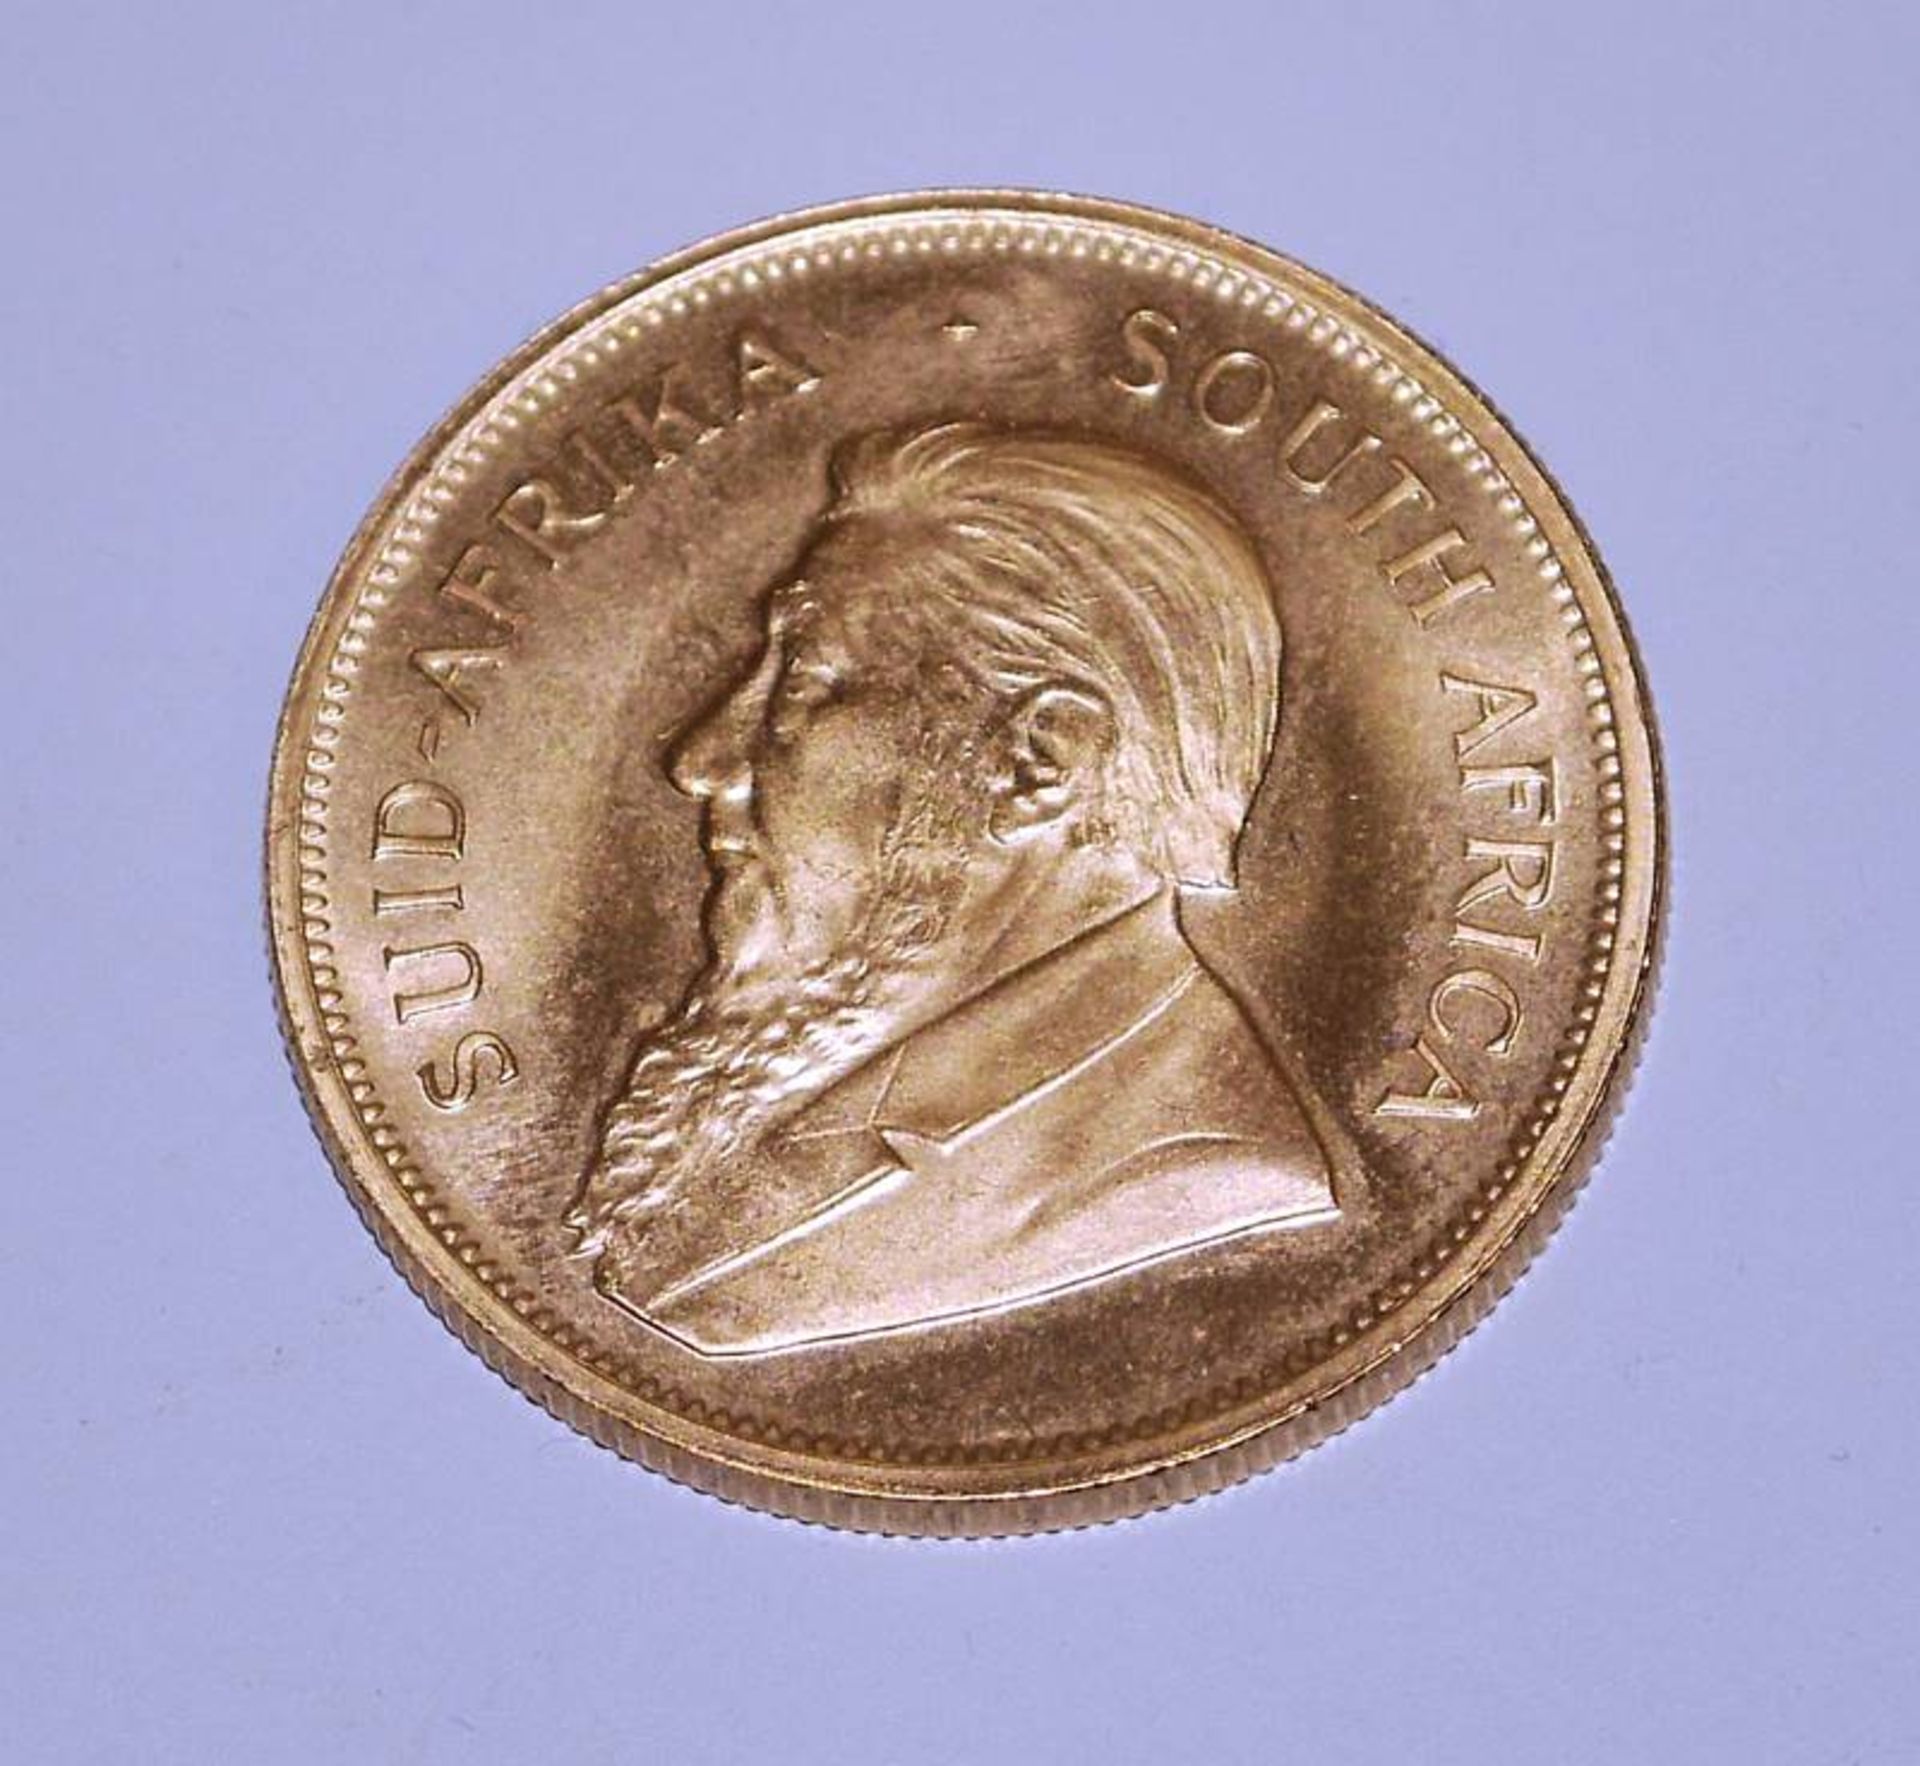 Goldmünze Krugerrand 1 Unze, Südafrika 1979 - Bild 2 aus 2